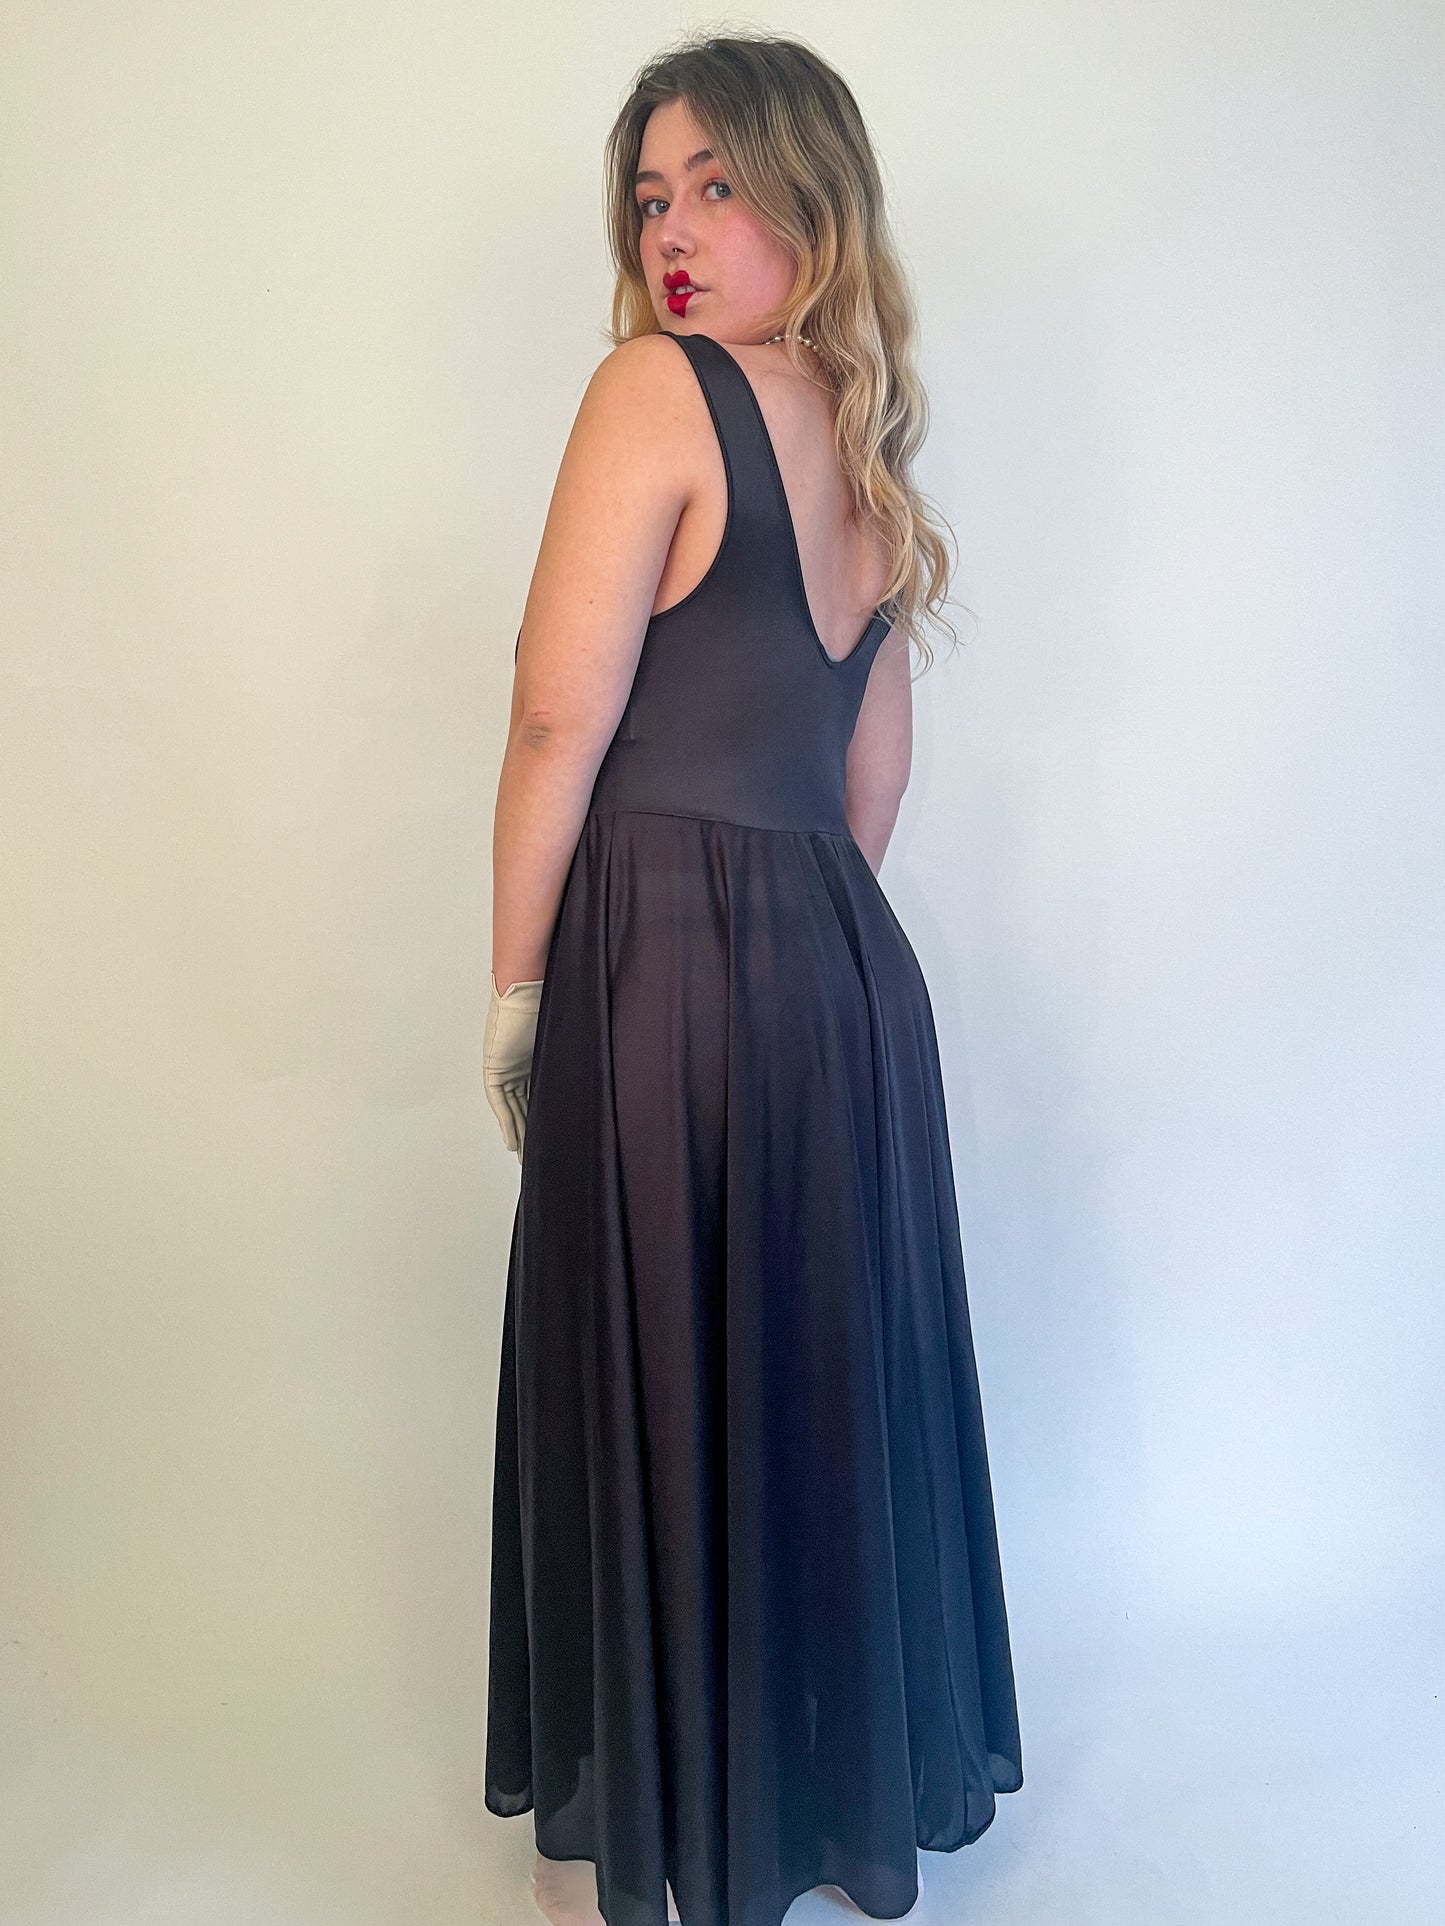 XL 70s Black Lace Slip Dress